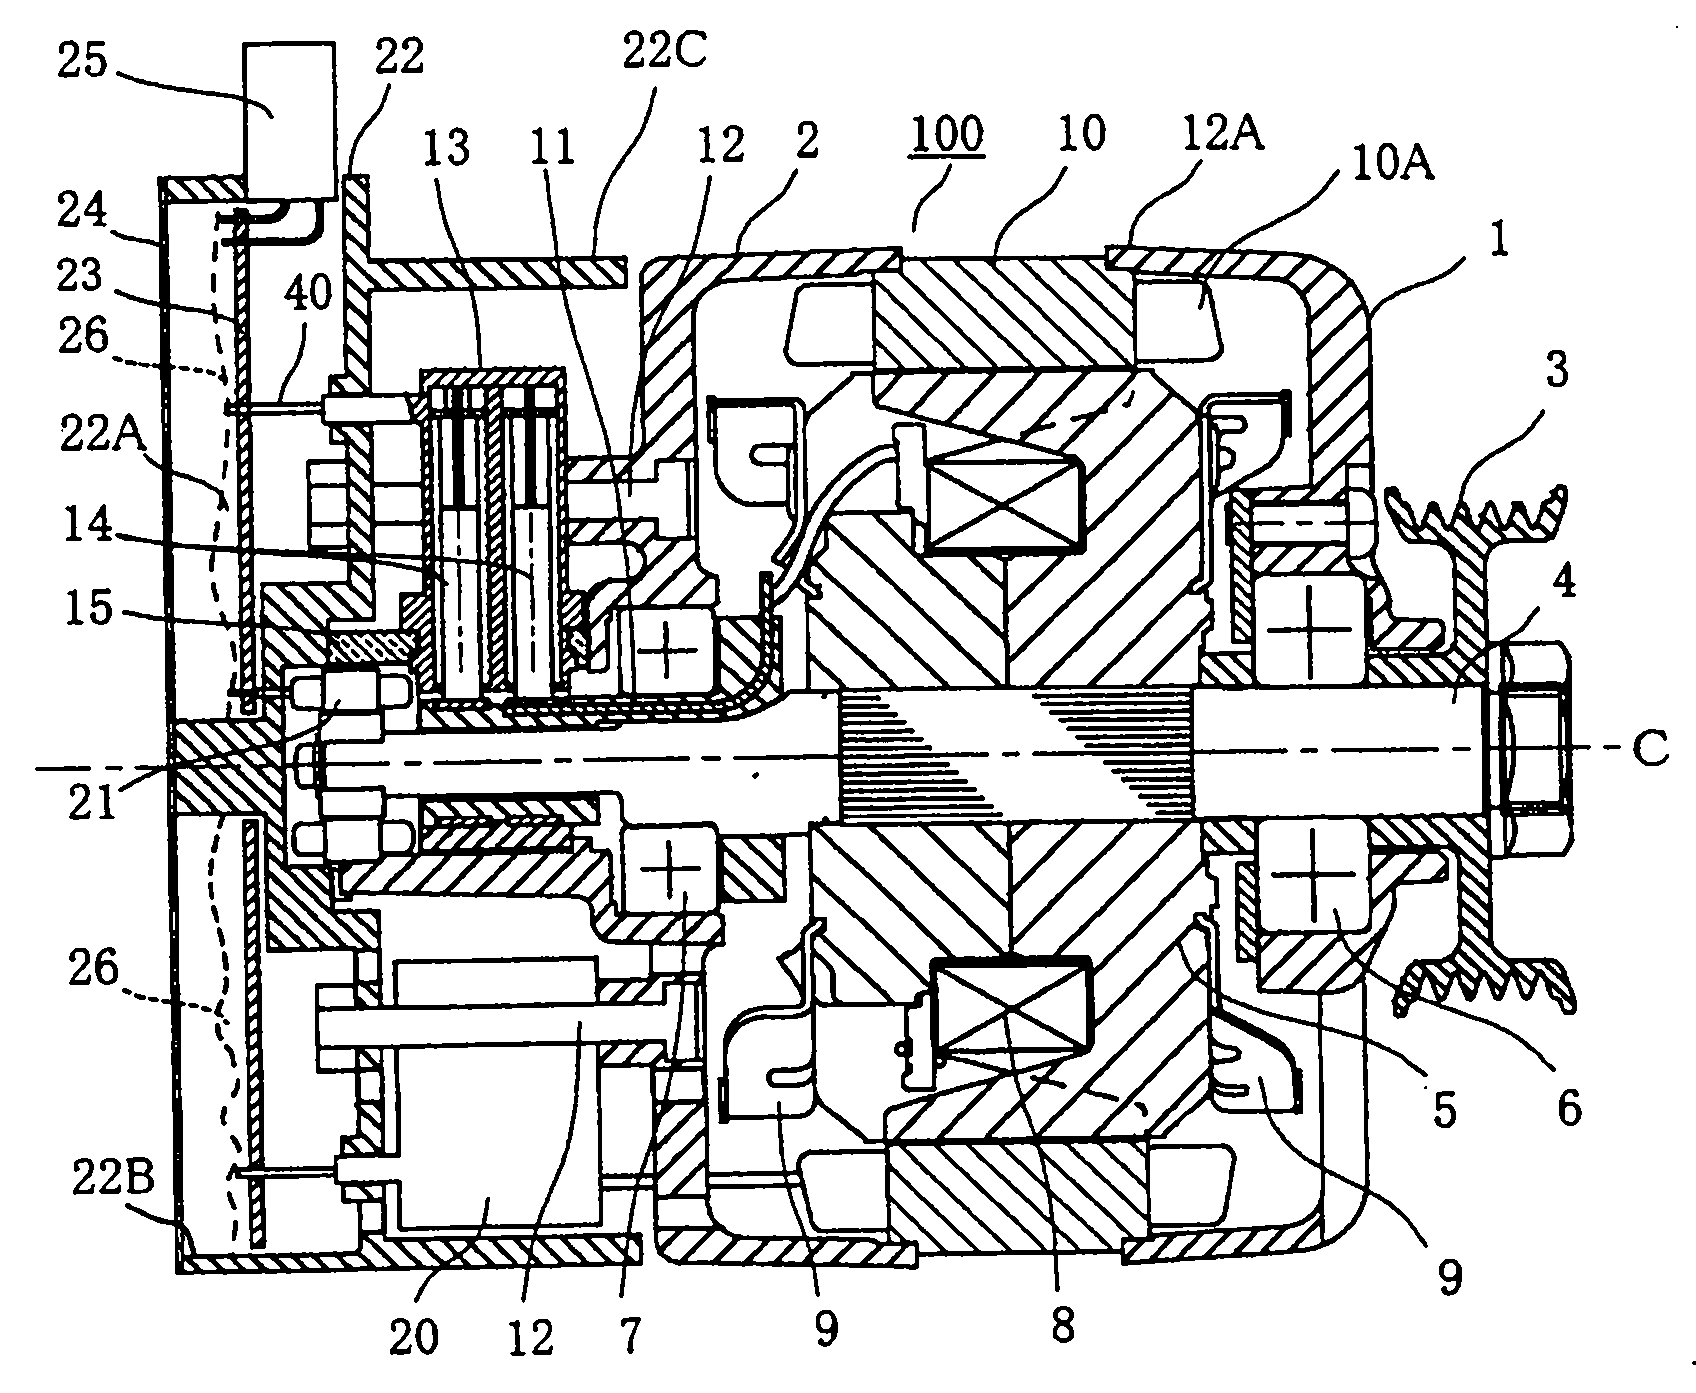 Motor generator unit